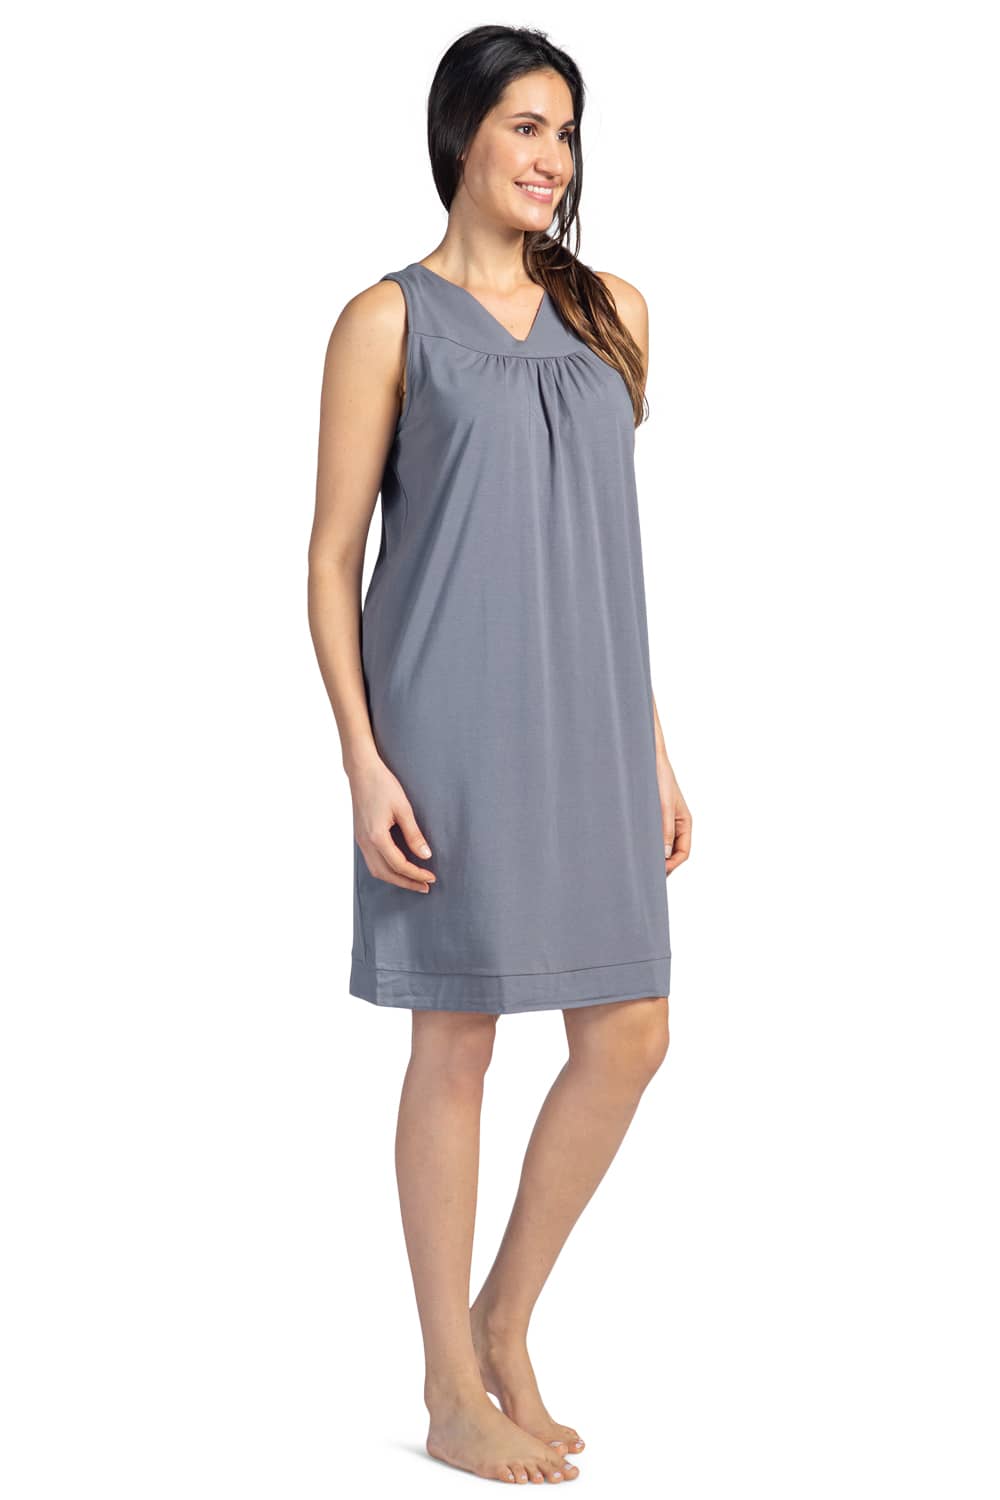 Women's Nightgown, Sleeveless Bamboo Nightgown